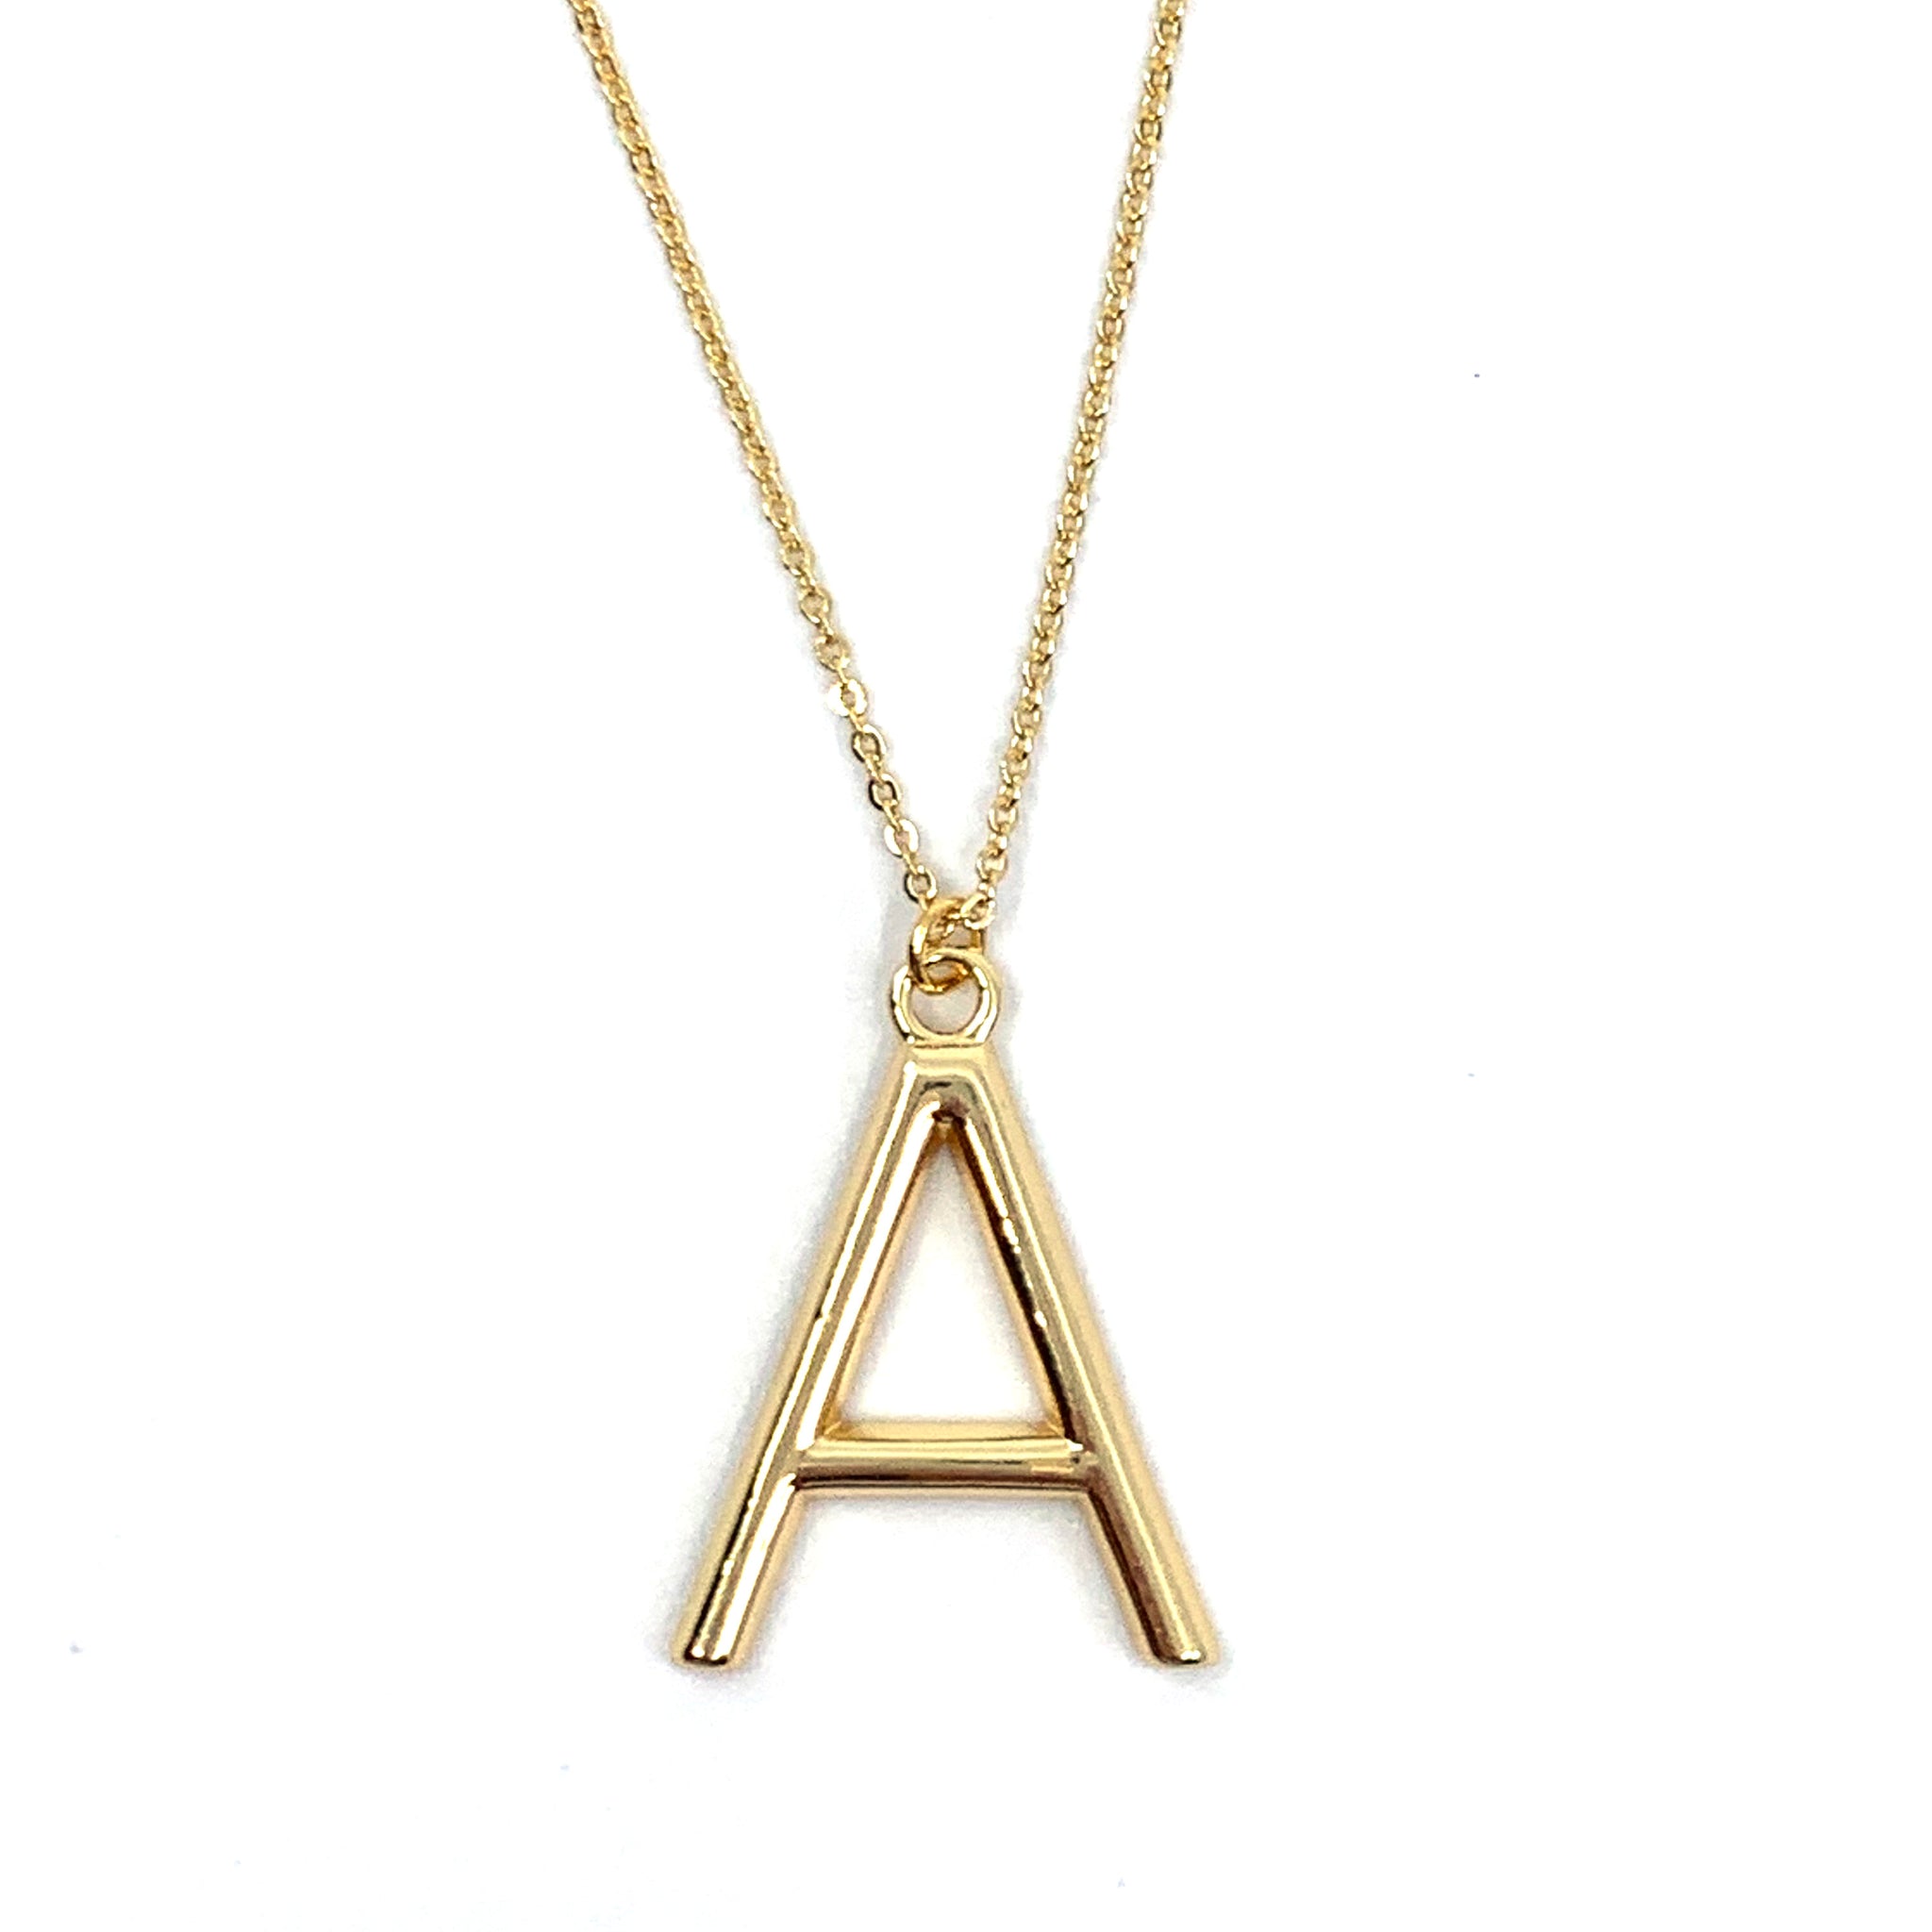 Alphabet Letter Necklace - Gold Large Single